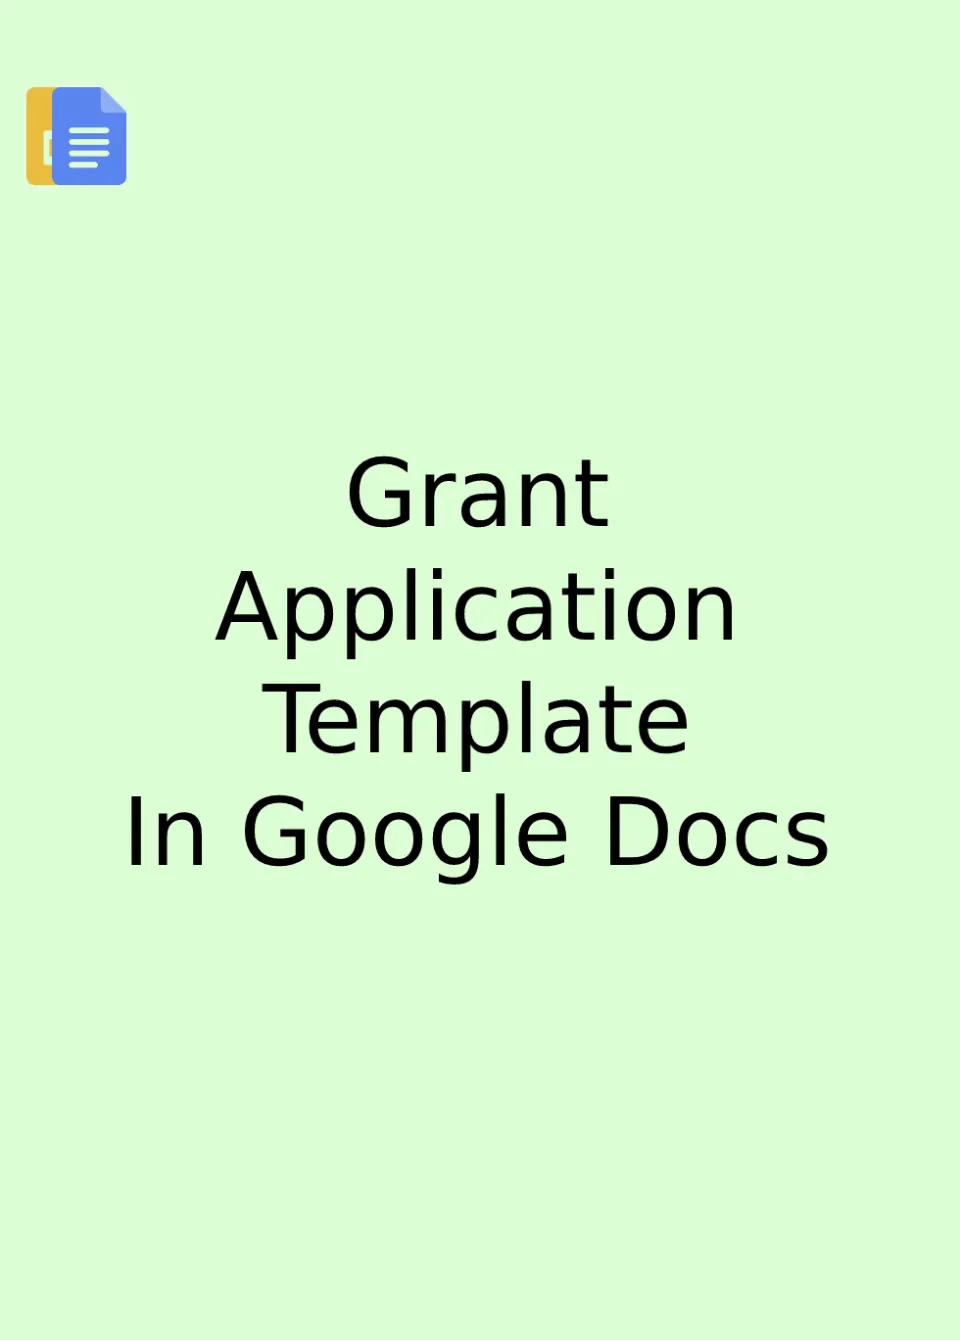 Grant Application Template Google Docs